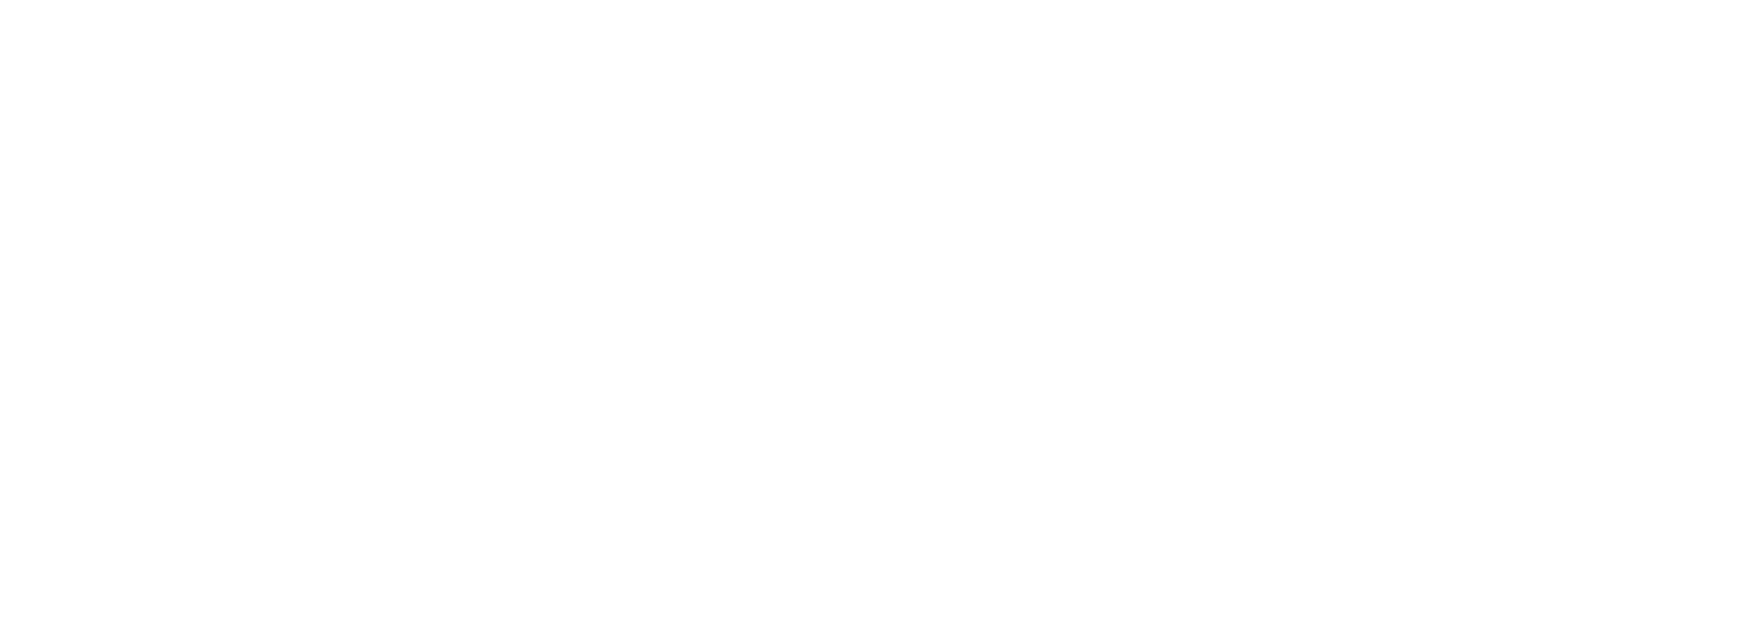 Black Apple New York Logo PNG